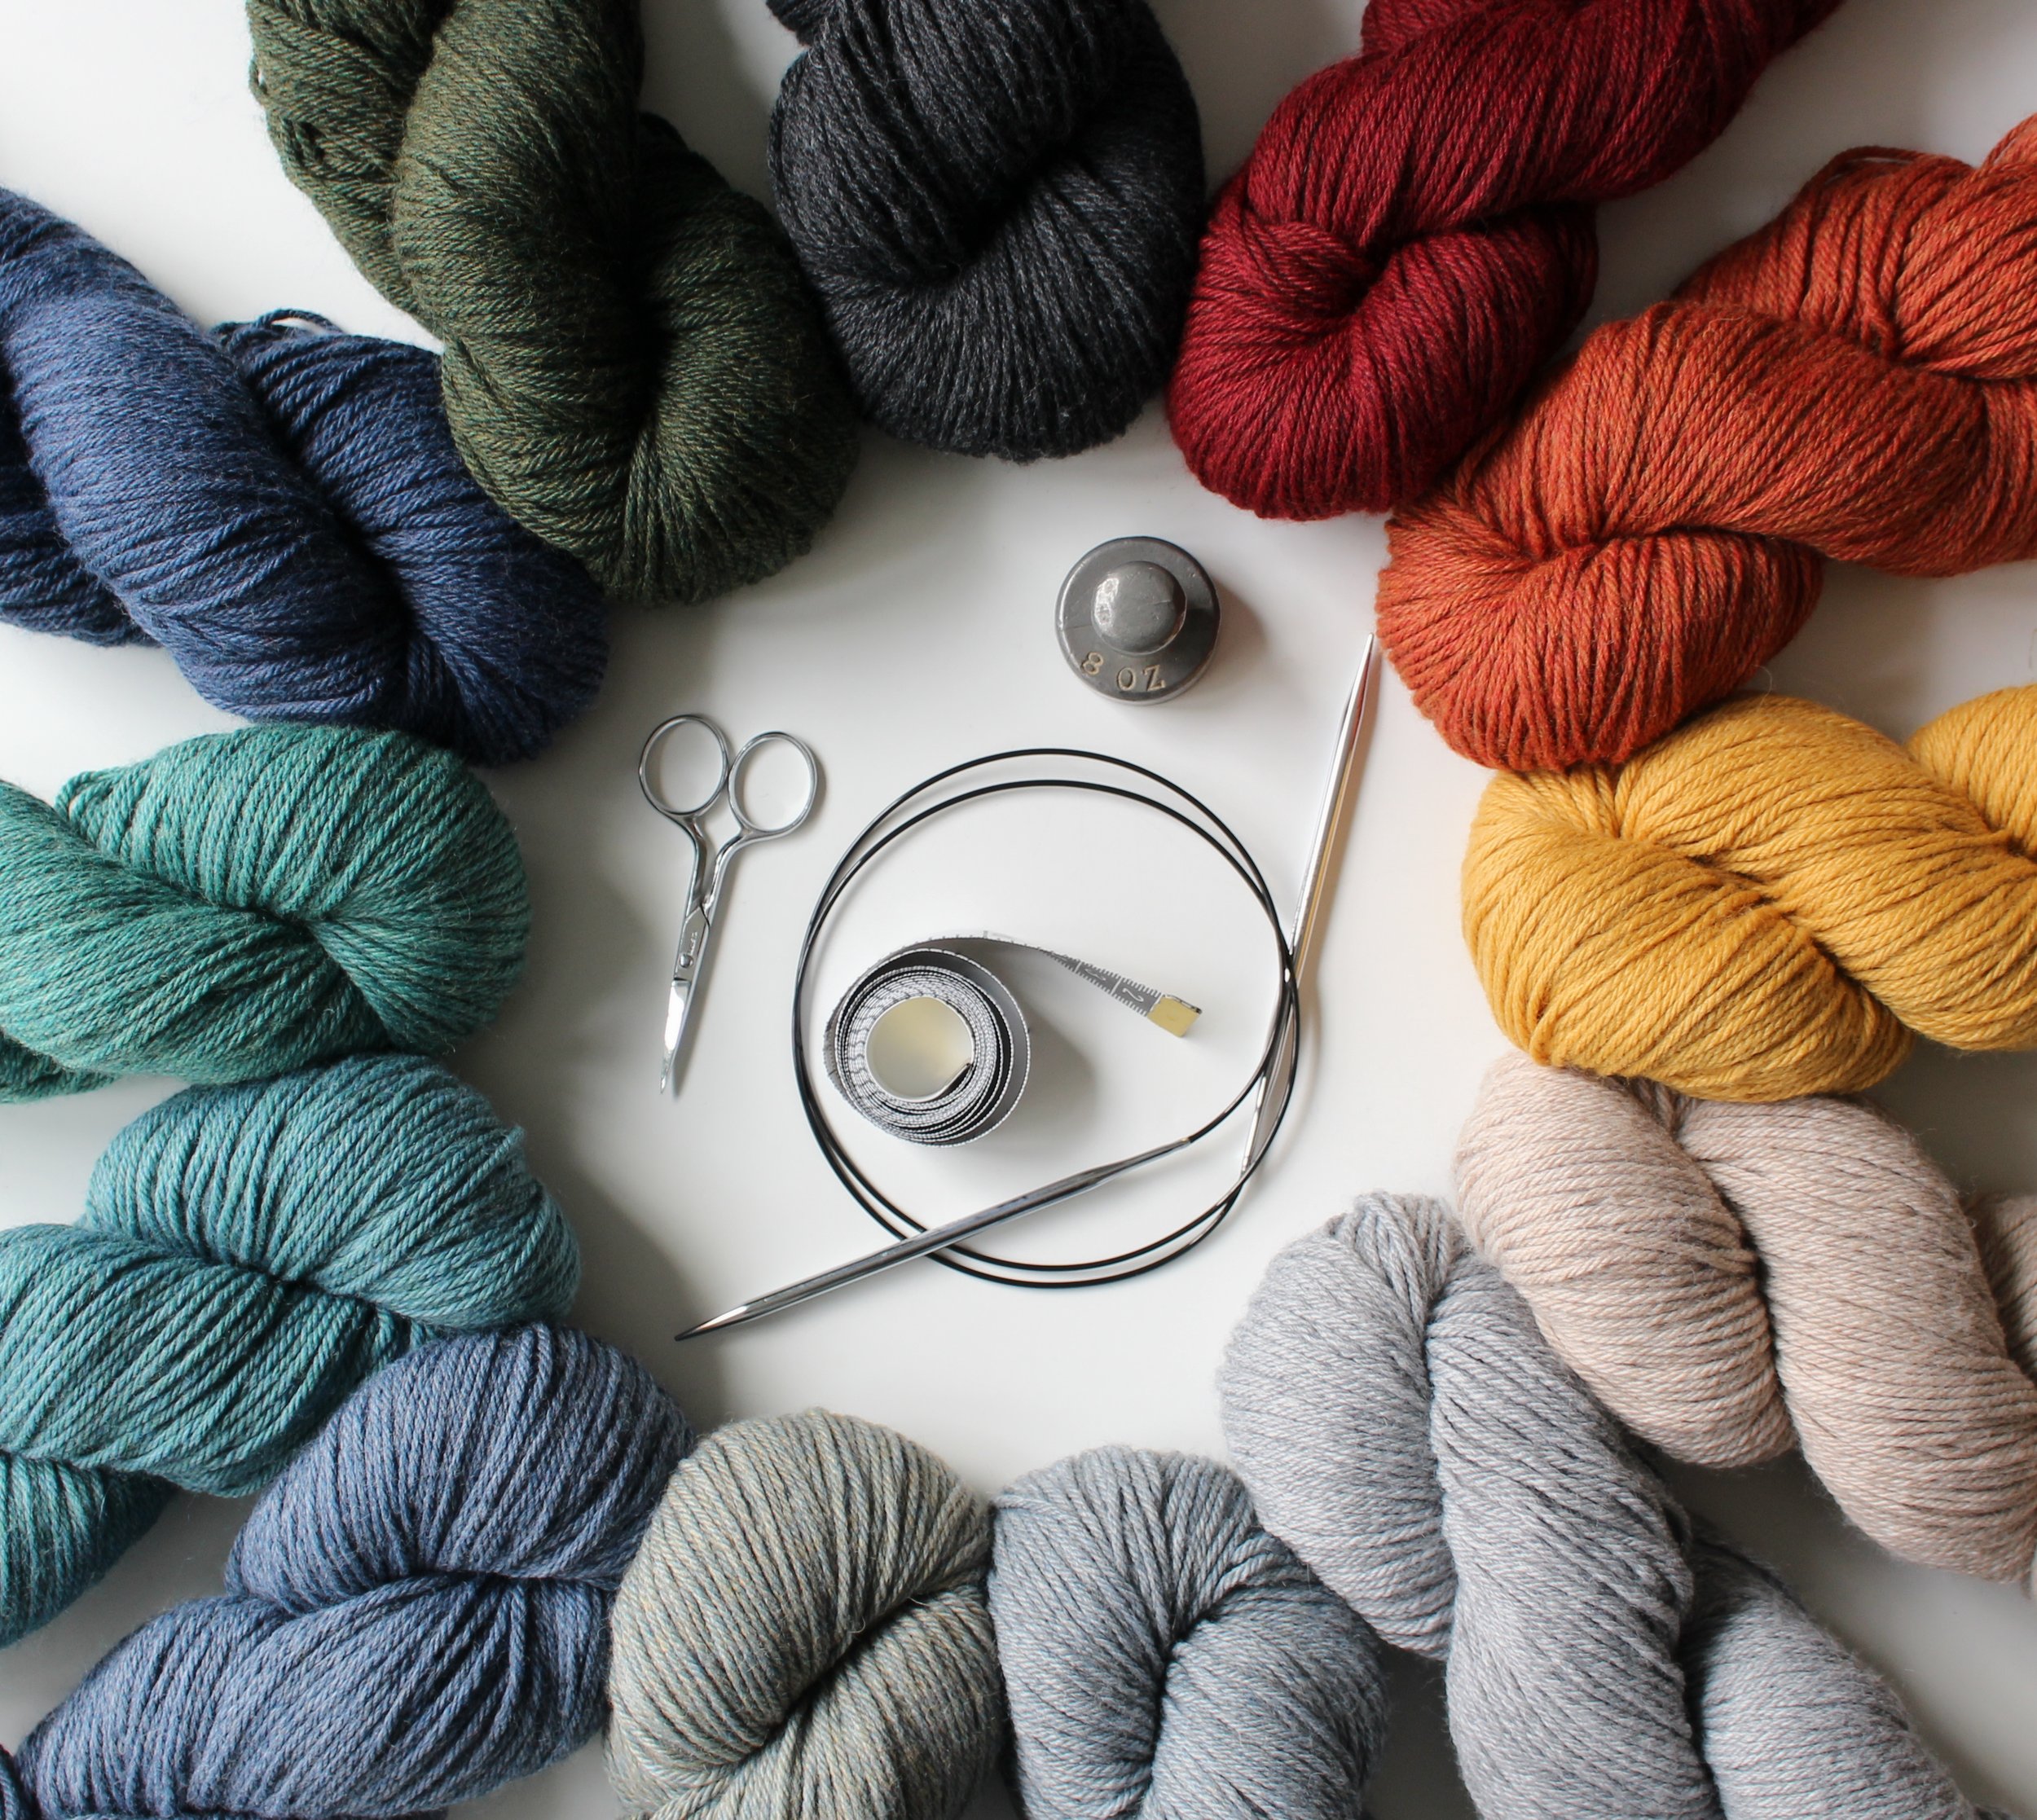 Complete Knit Picks Yarn Guide